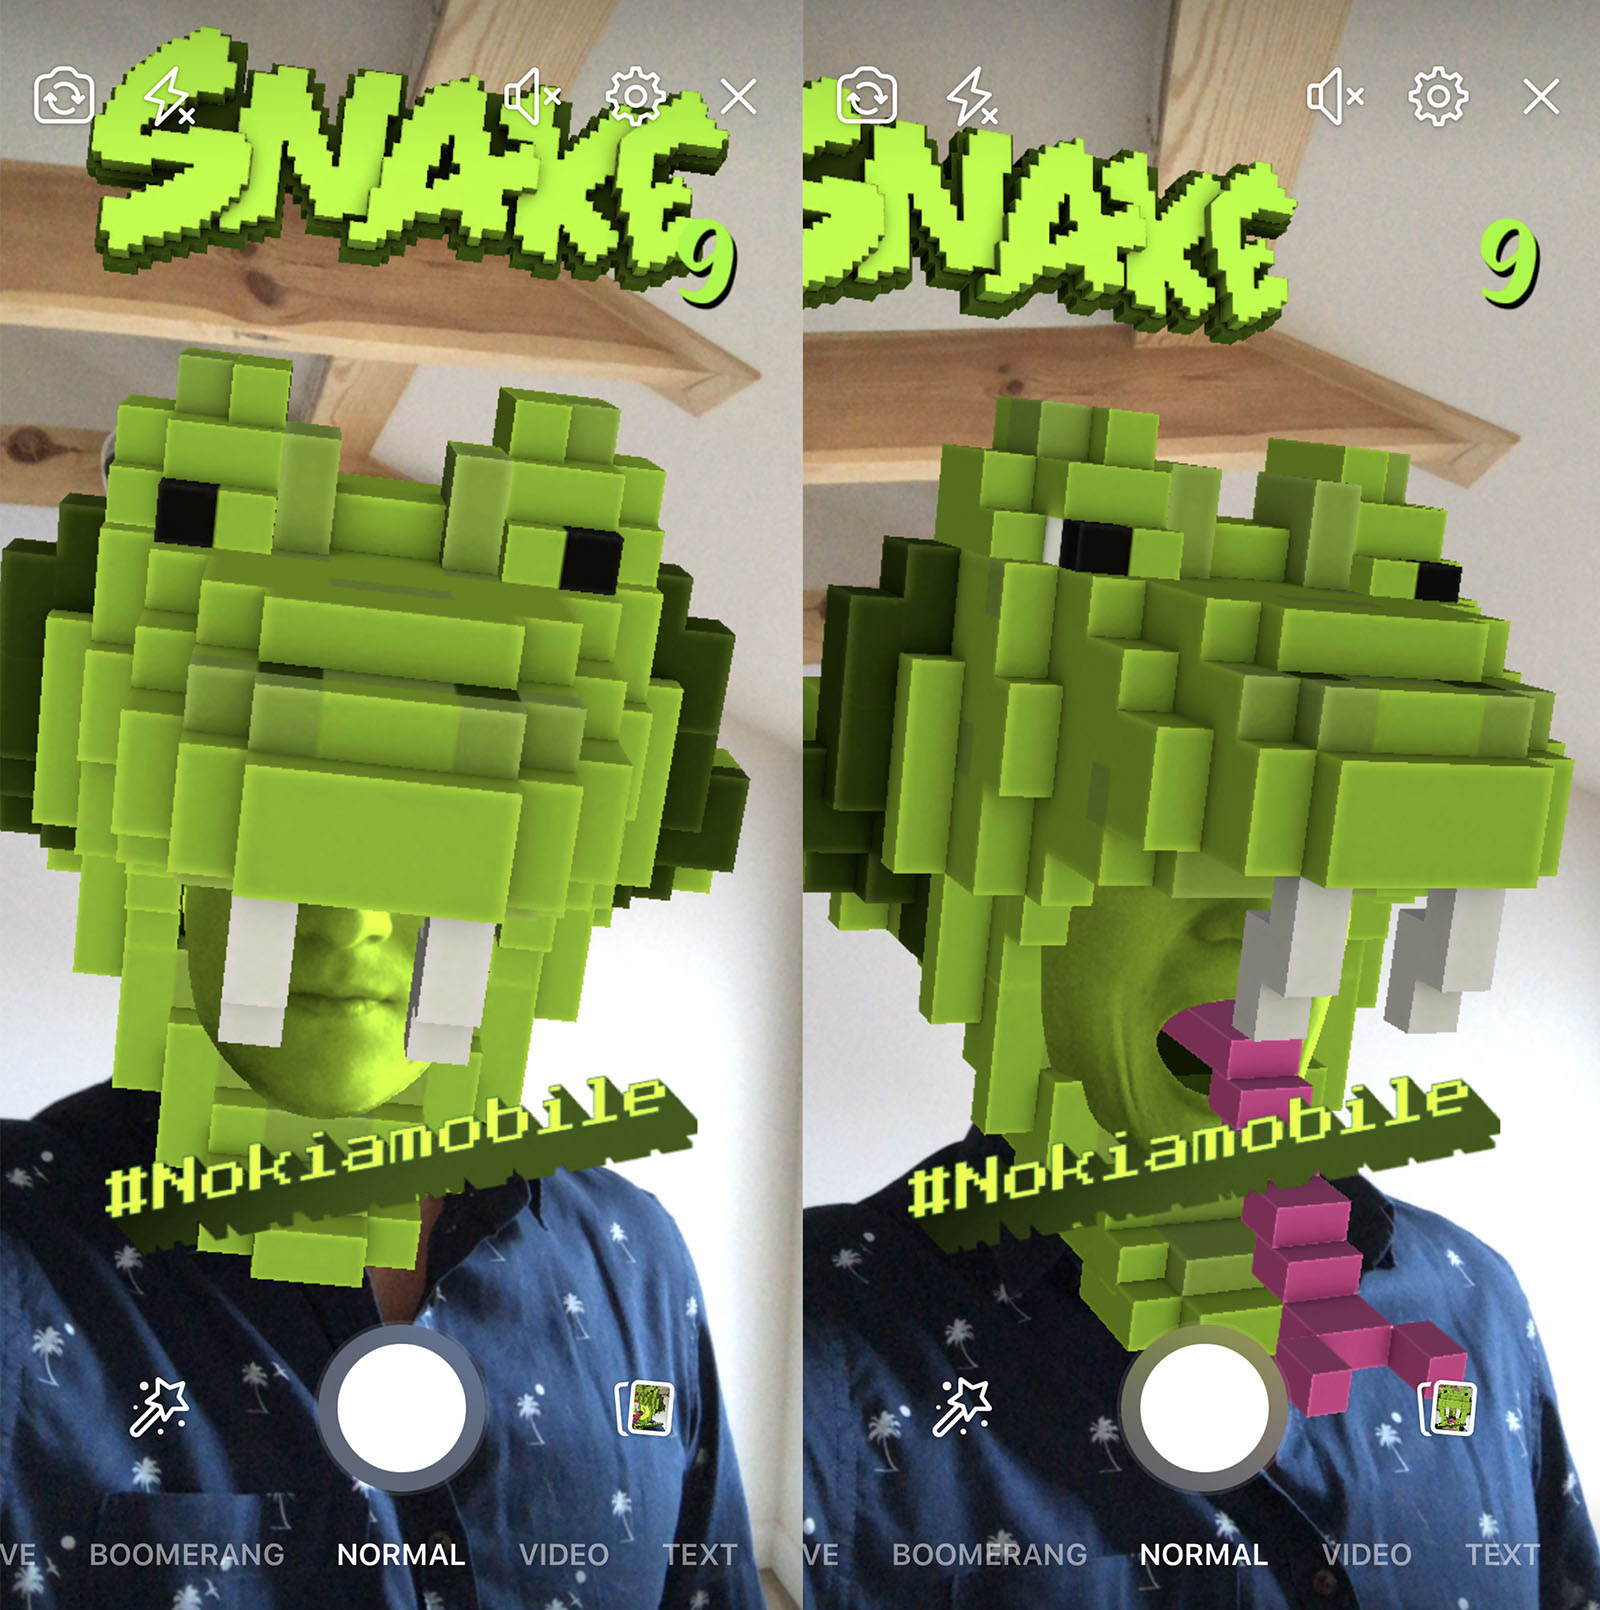 HMD Global brings back Snake through Facebook AR feature